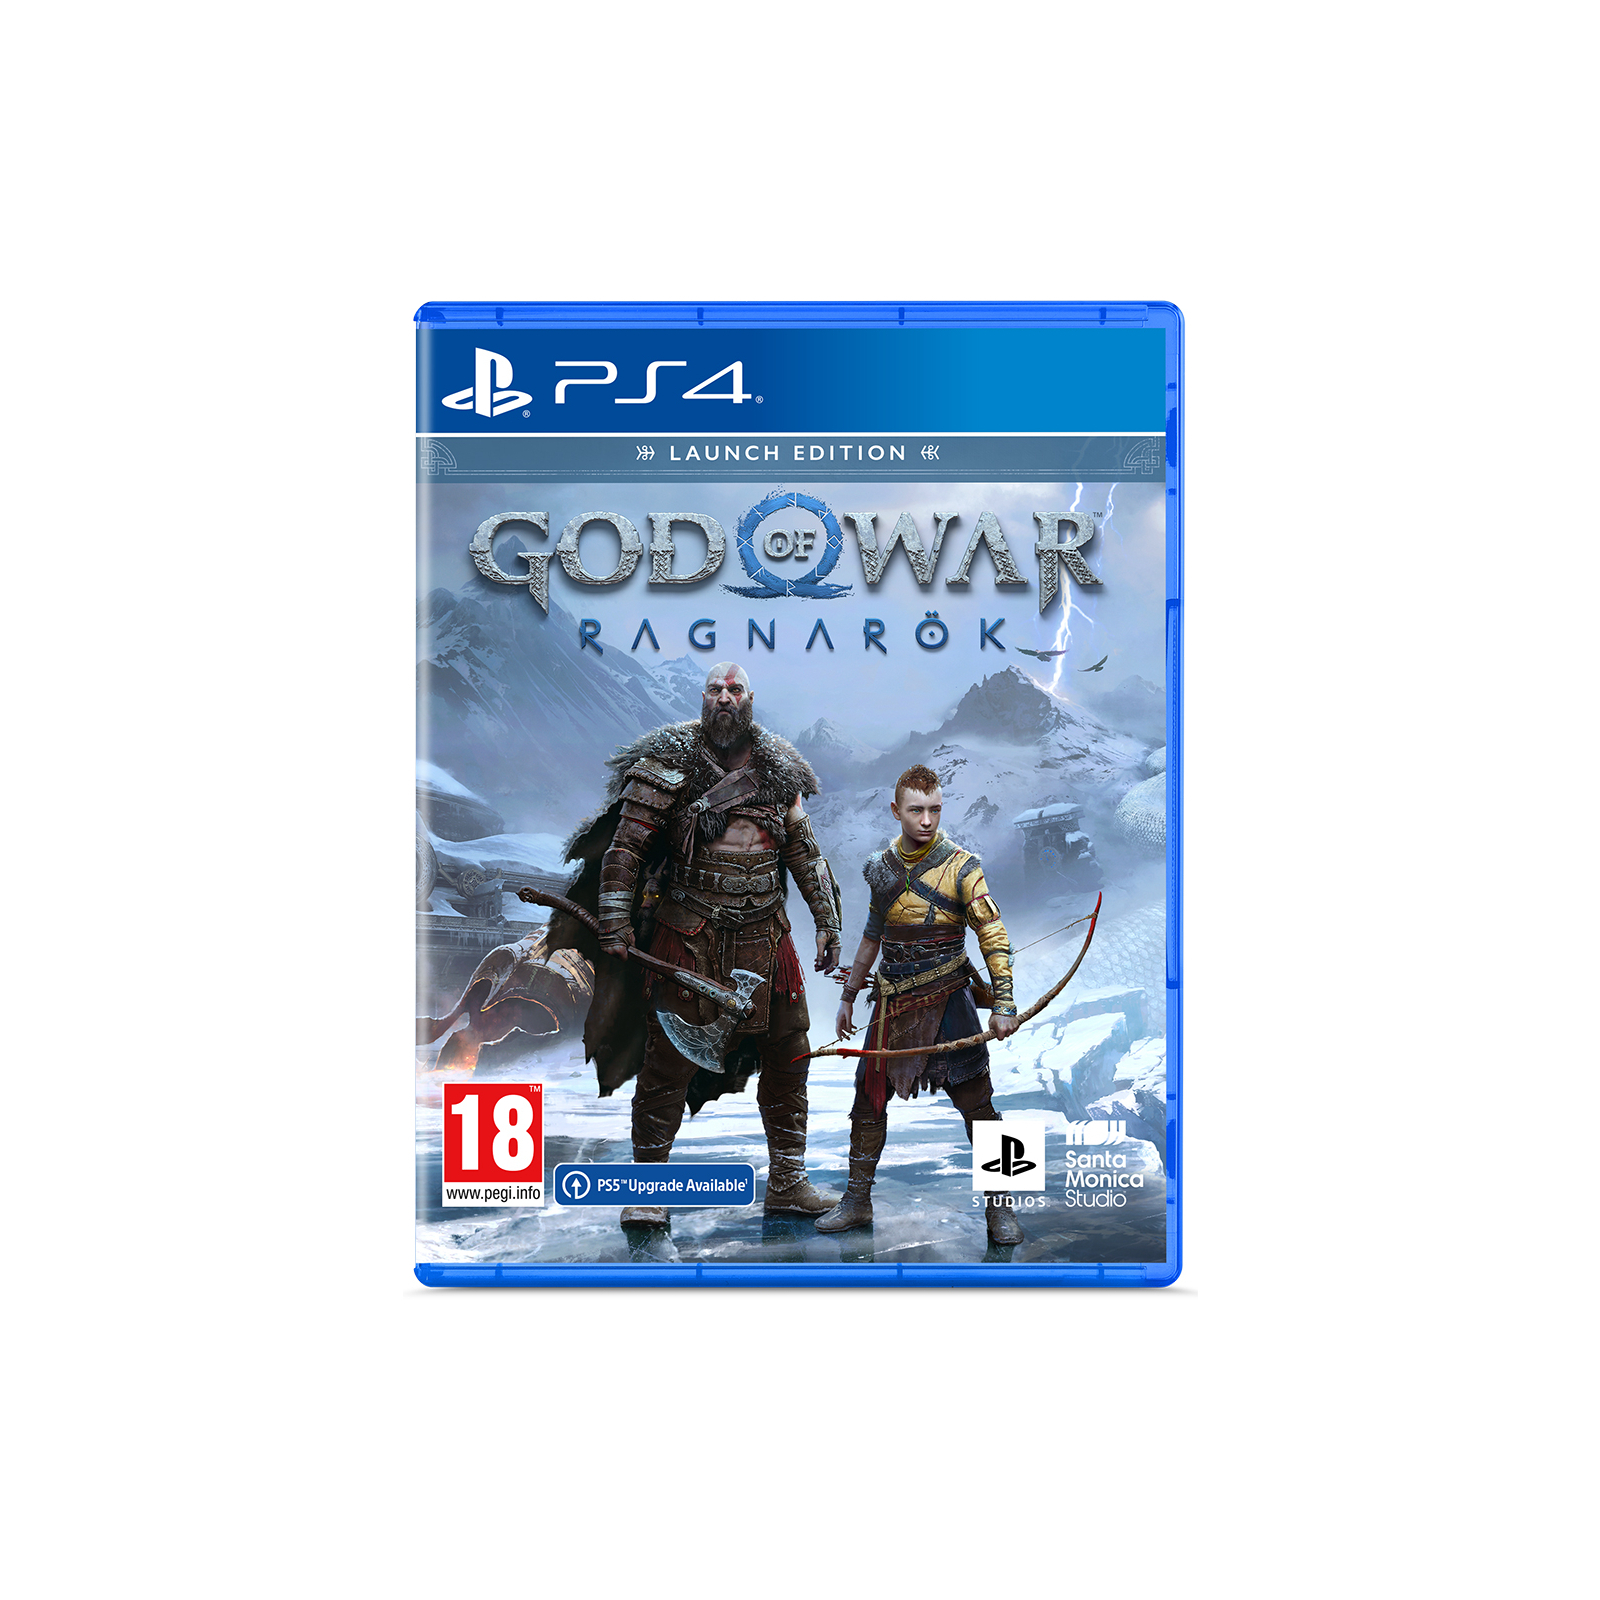 Гра Sony God of War Ragnarok [PS4] (9408796)